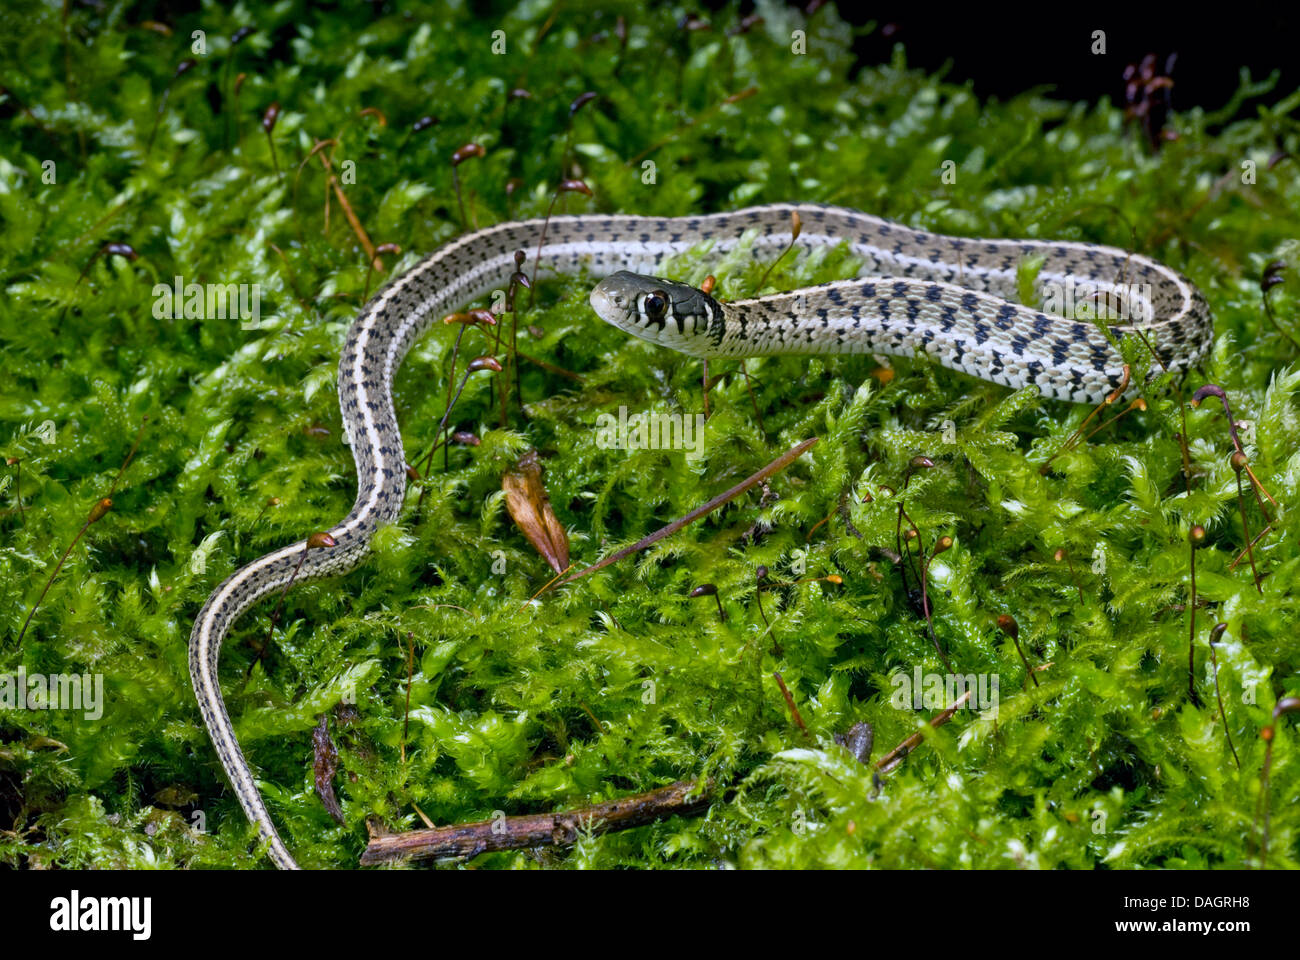 Giarrettiera a scacchi Snake (Thamnophis marcianus), sul muschio Foto Stock